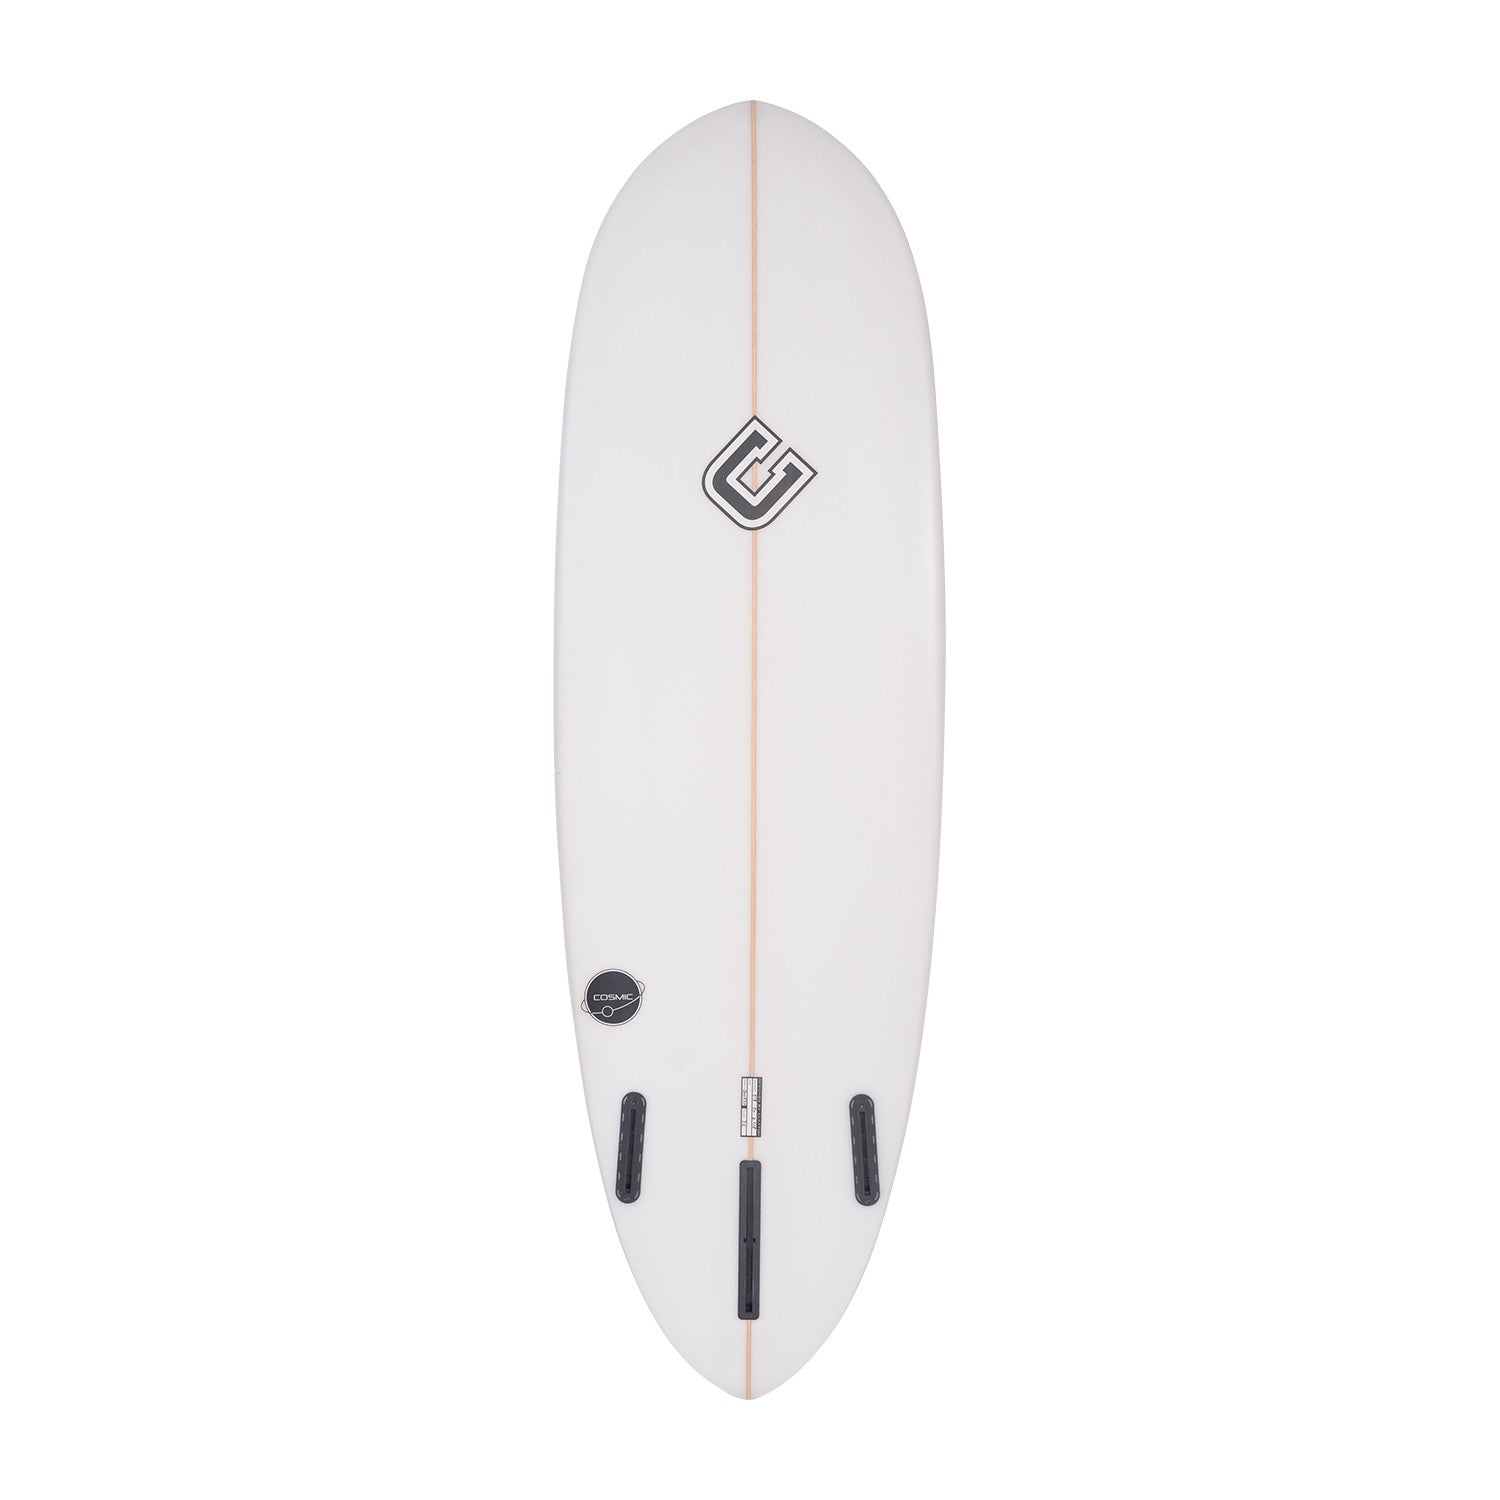 CLAYTON Surfboards - Cosmic (PU) Futures - 5'8